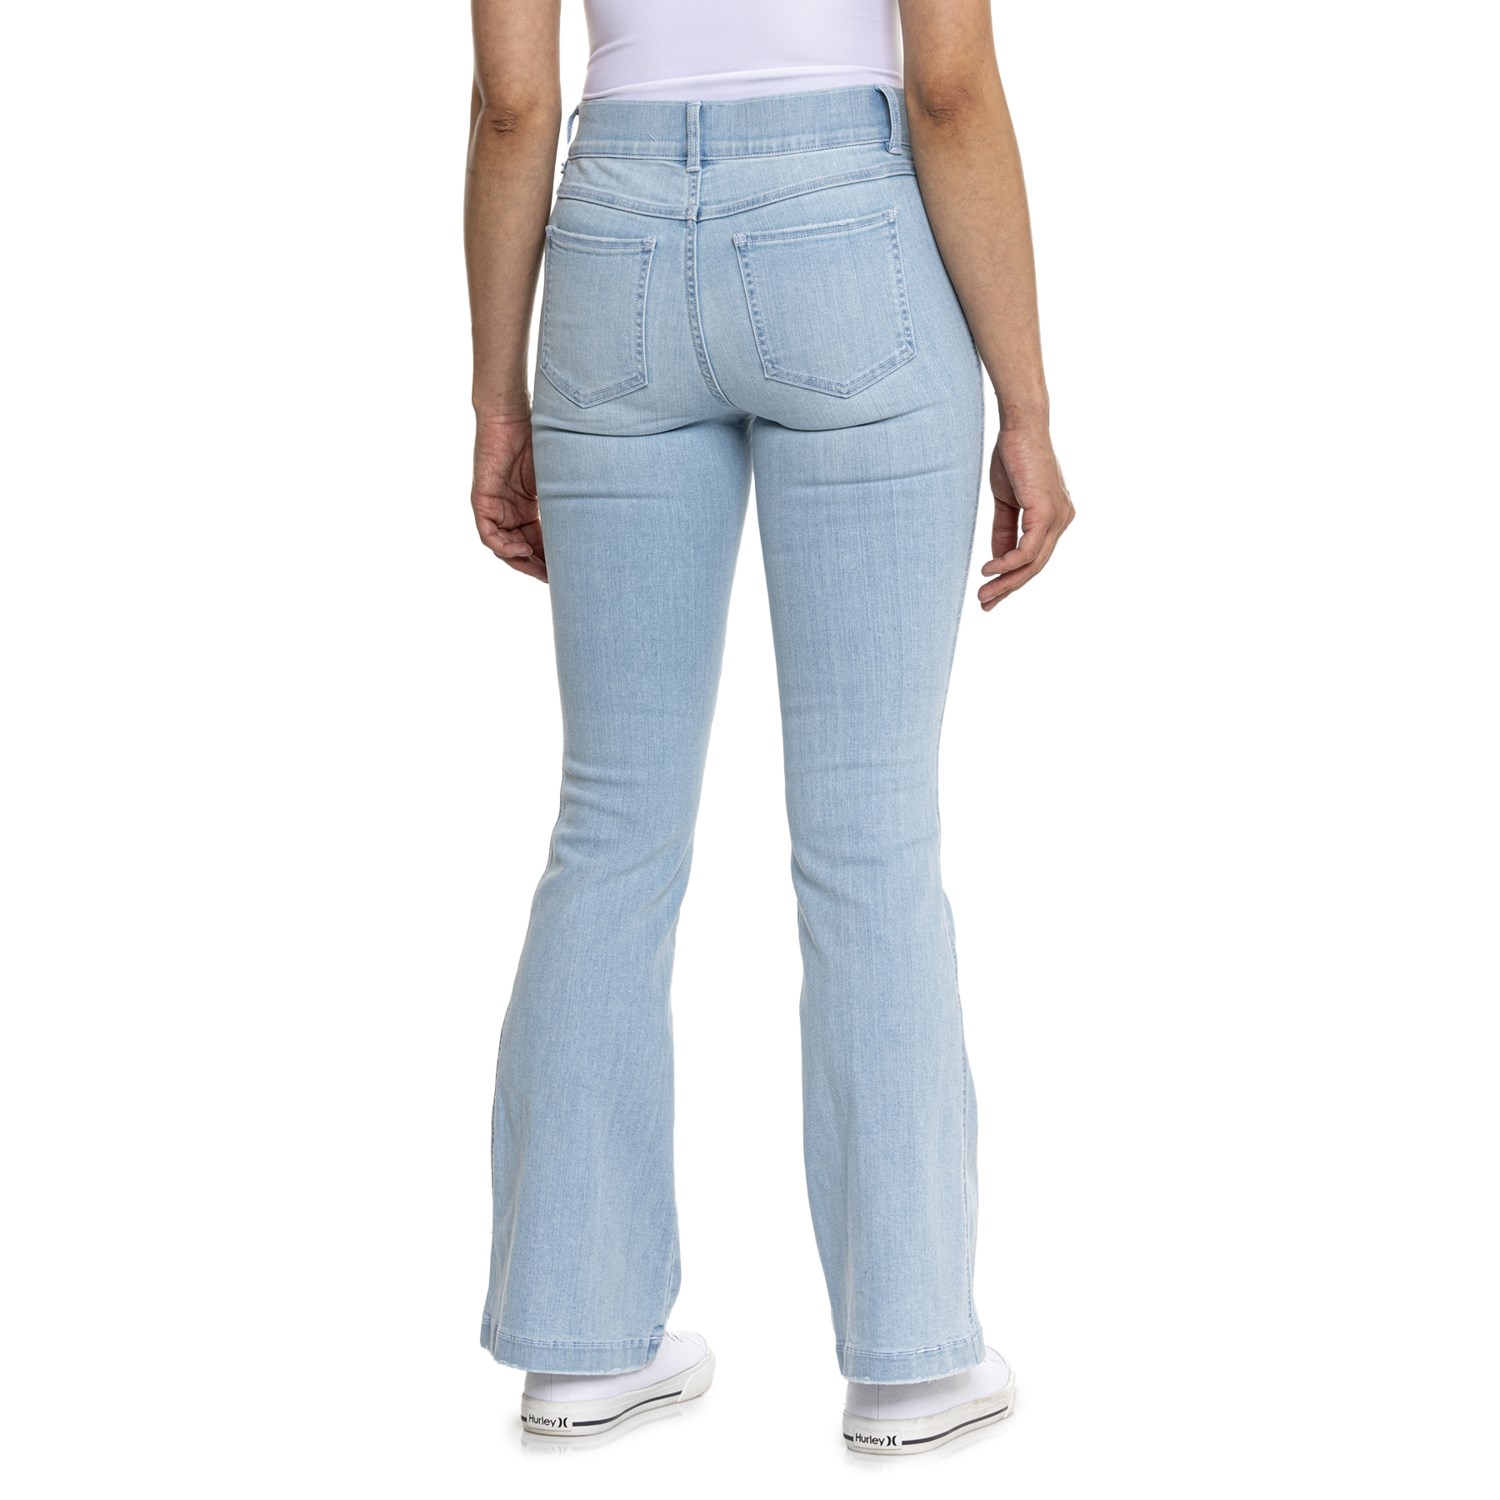 Spanx Petite Flare Jeans - Save 59%